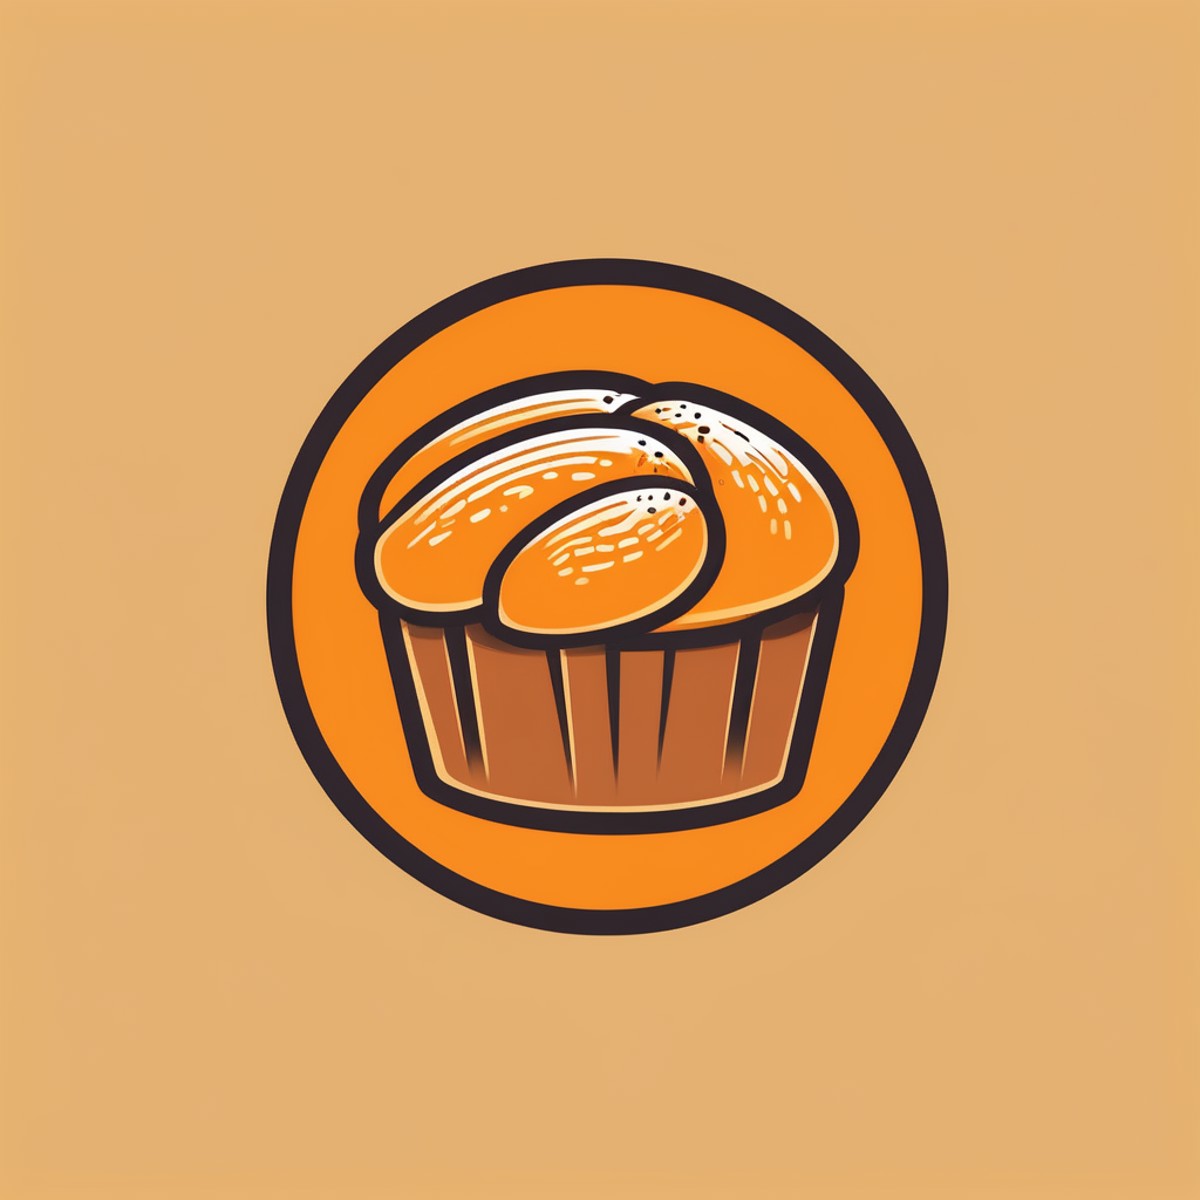 A logo for a bakery, freshly baked bread, warm colors (orange, yellow), no text, minimalist, LogoRedAF, <lora:LogoRedmond_...